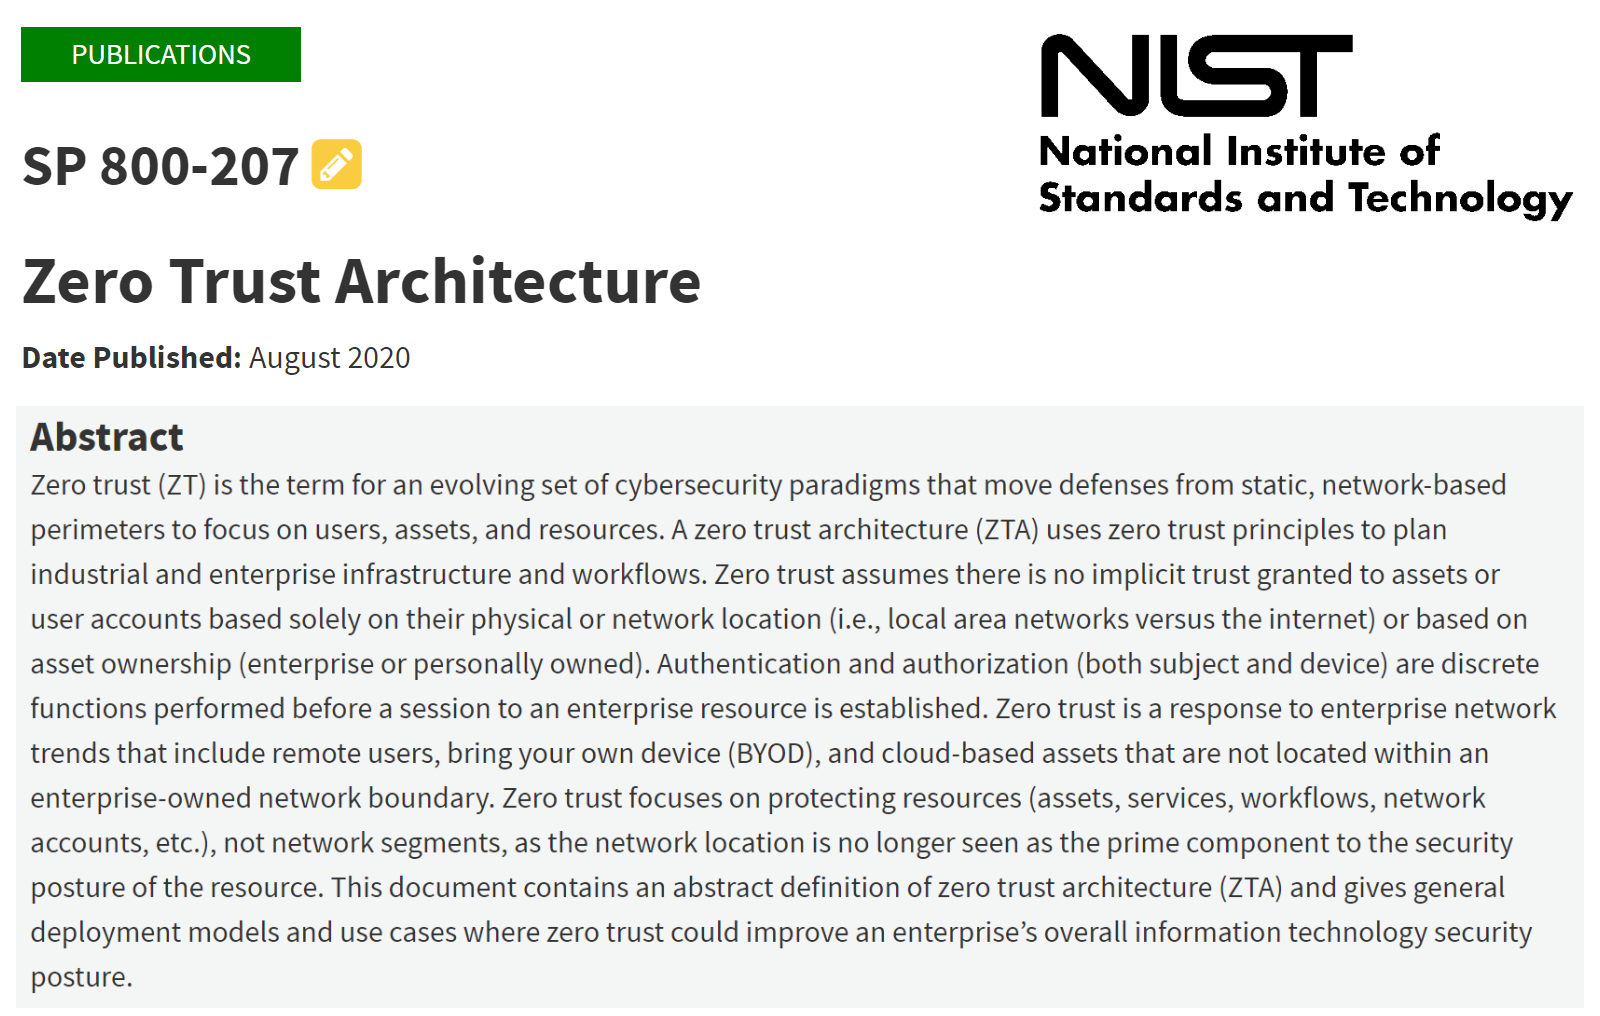 NIST - SP 800-207 Zero Trust Architecture